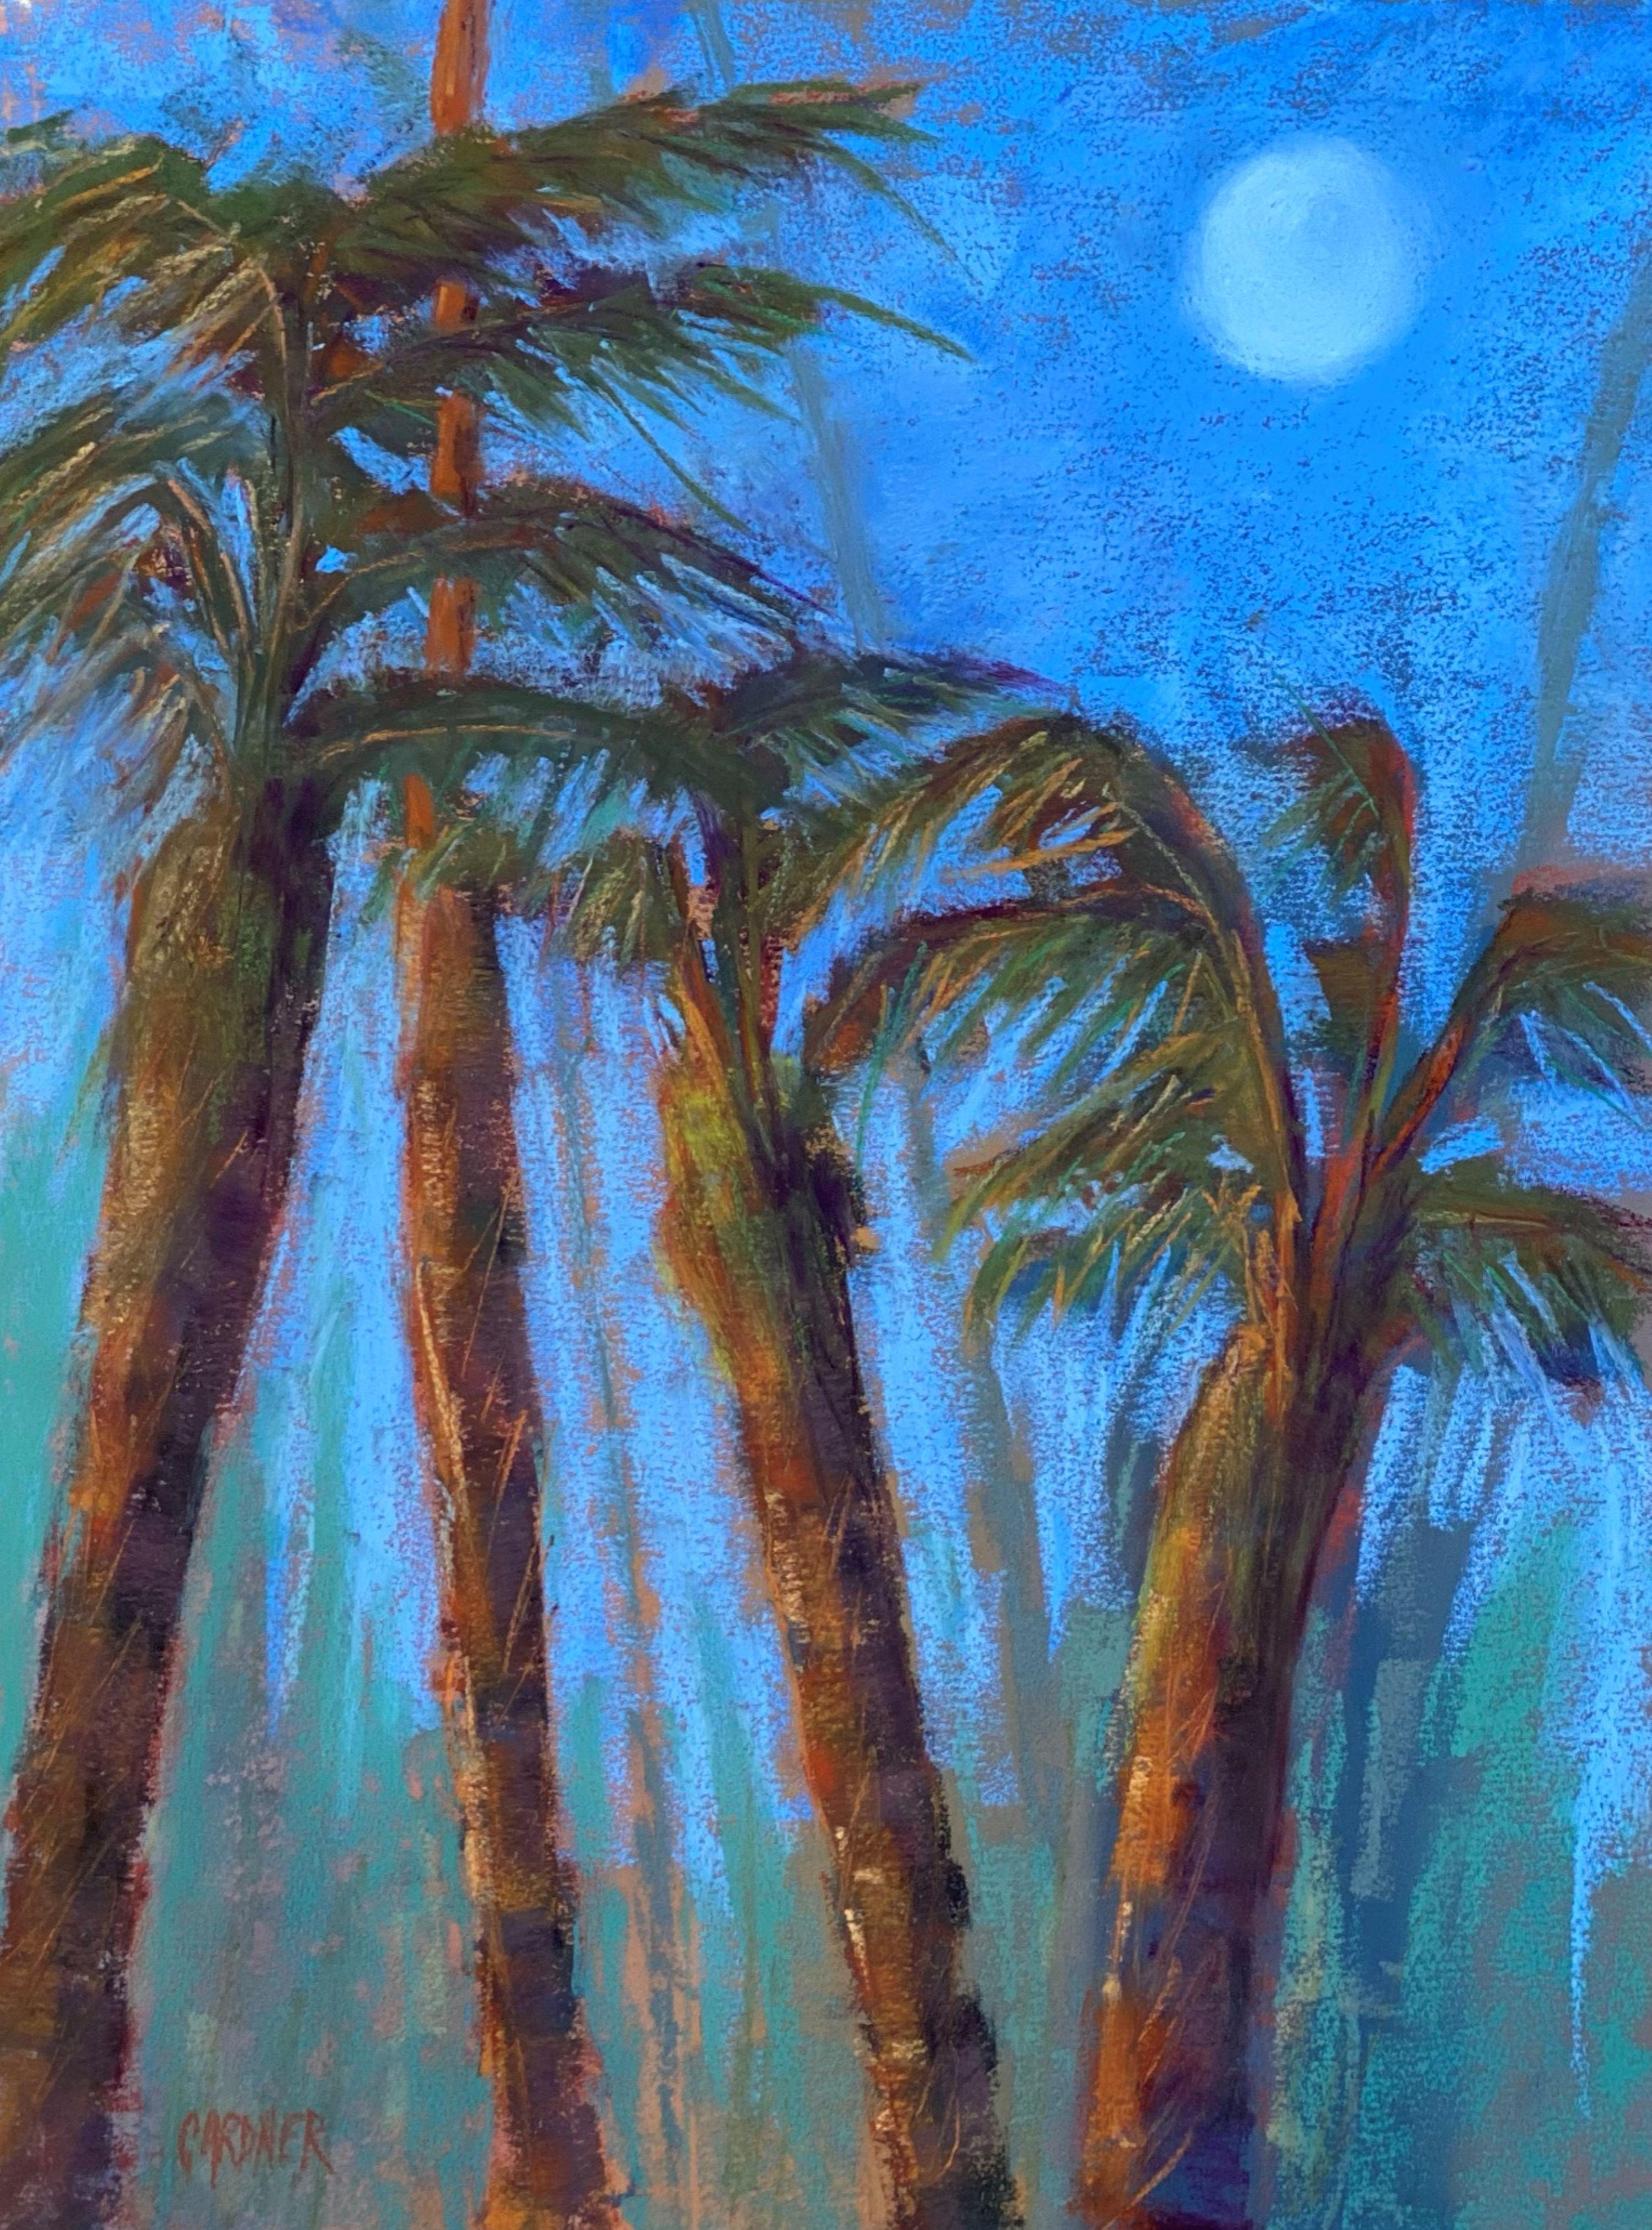 Moondance, Original Pastel Landscape Painting on Board, 2021